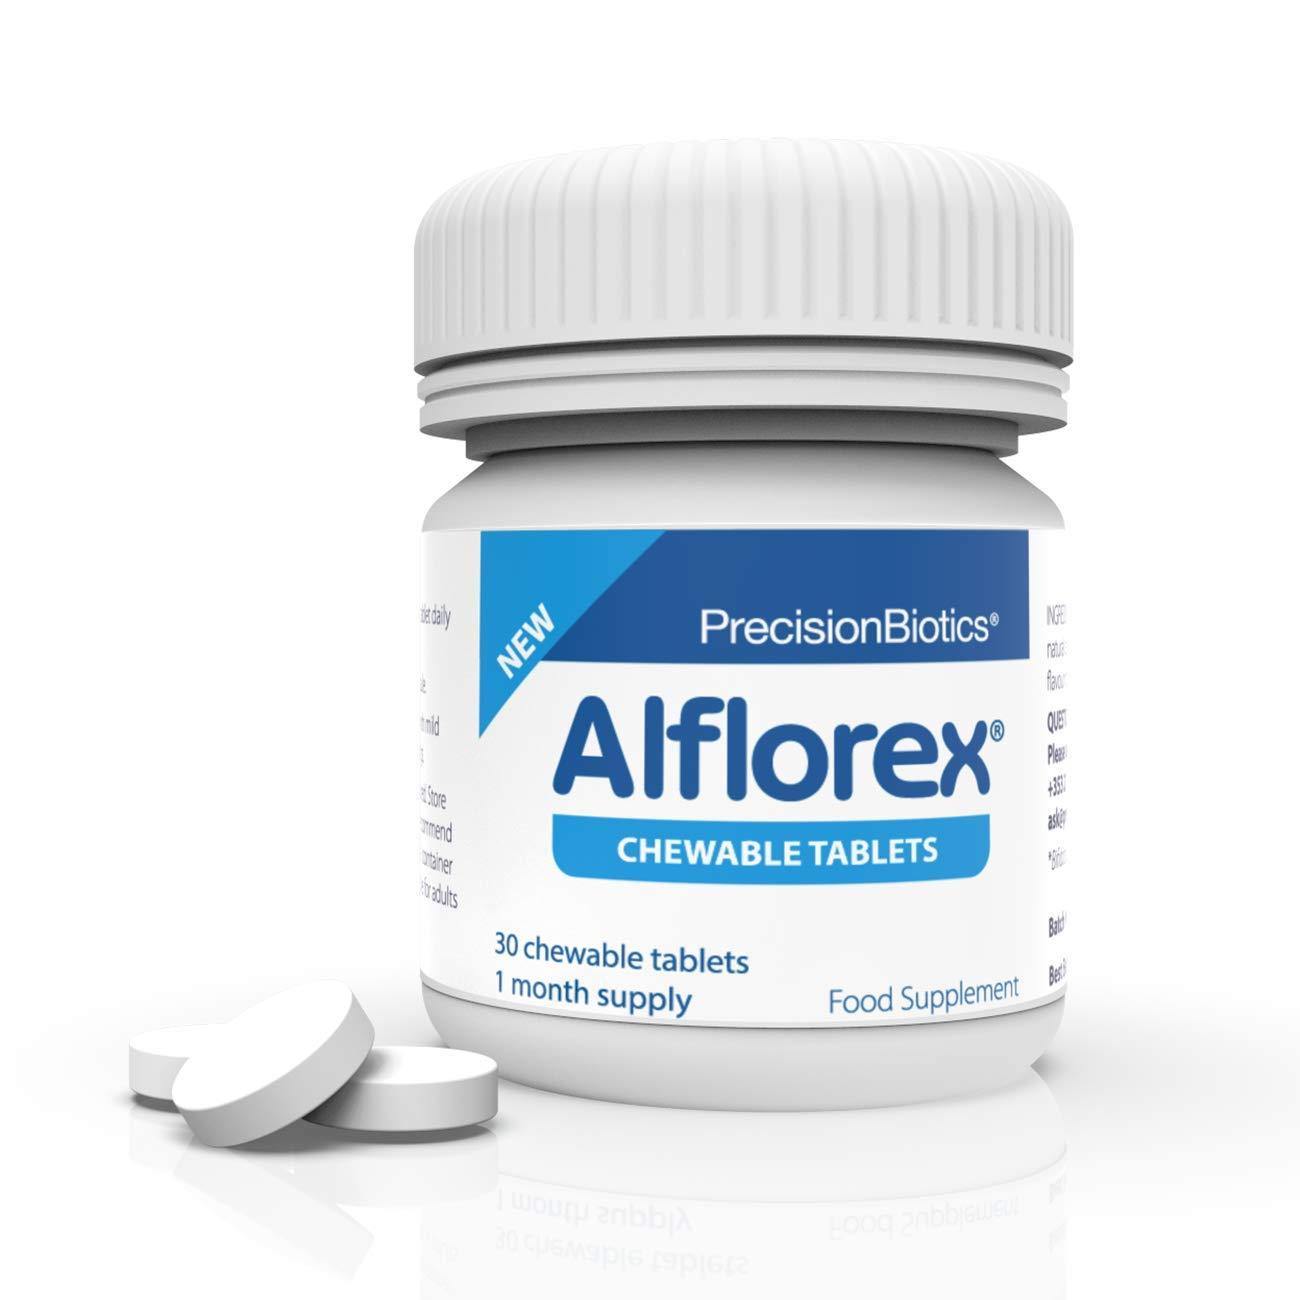 Alflorex Chewable Tablets - Medipharm Online - Cheap Online Pharmacy Dublin Ireland Europe Best Price